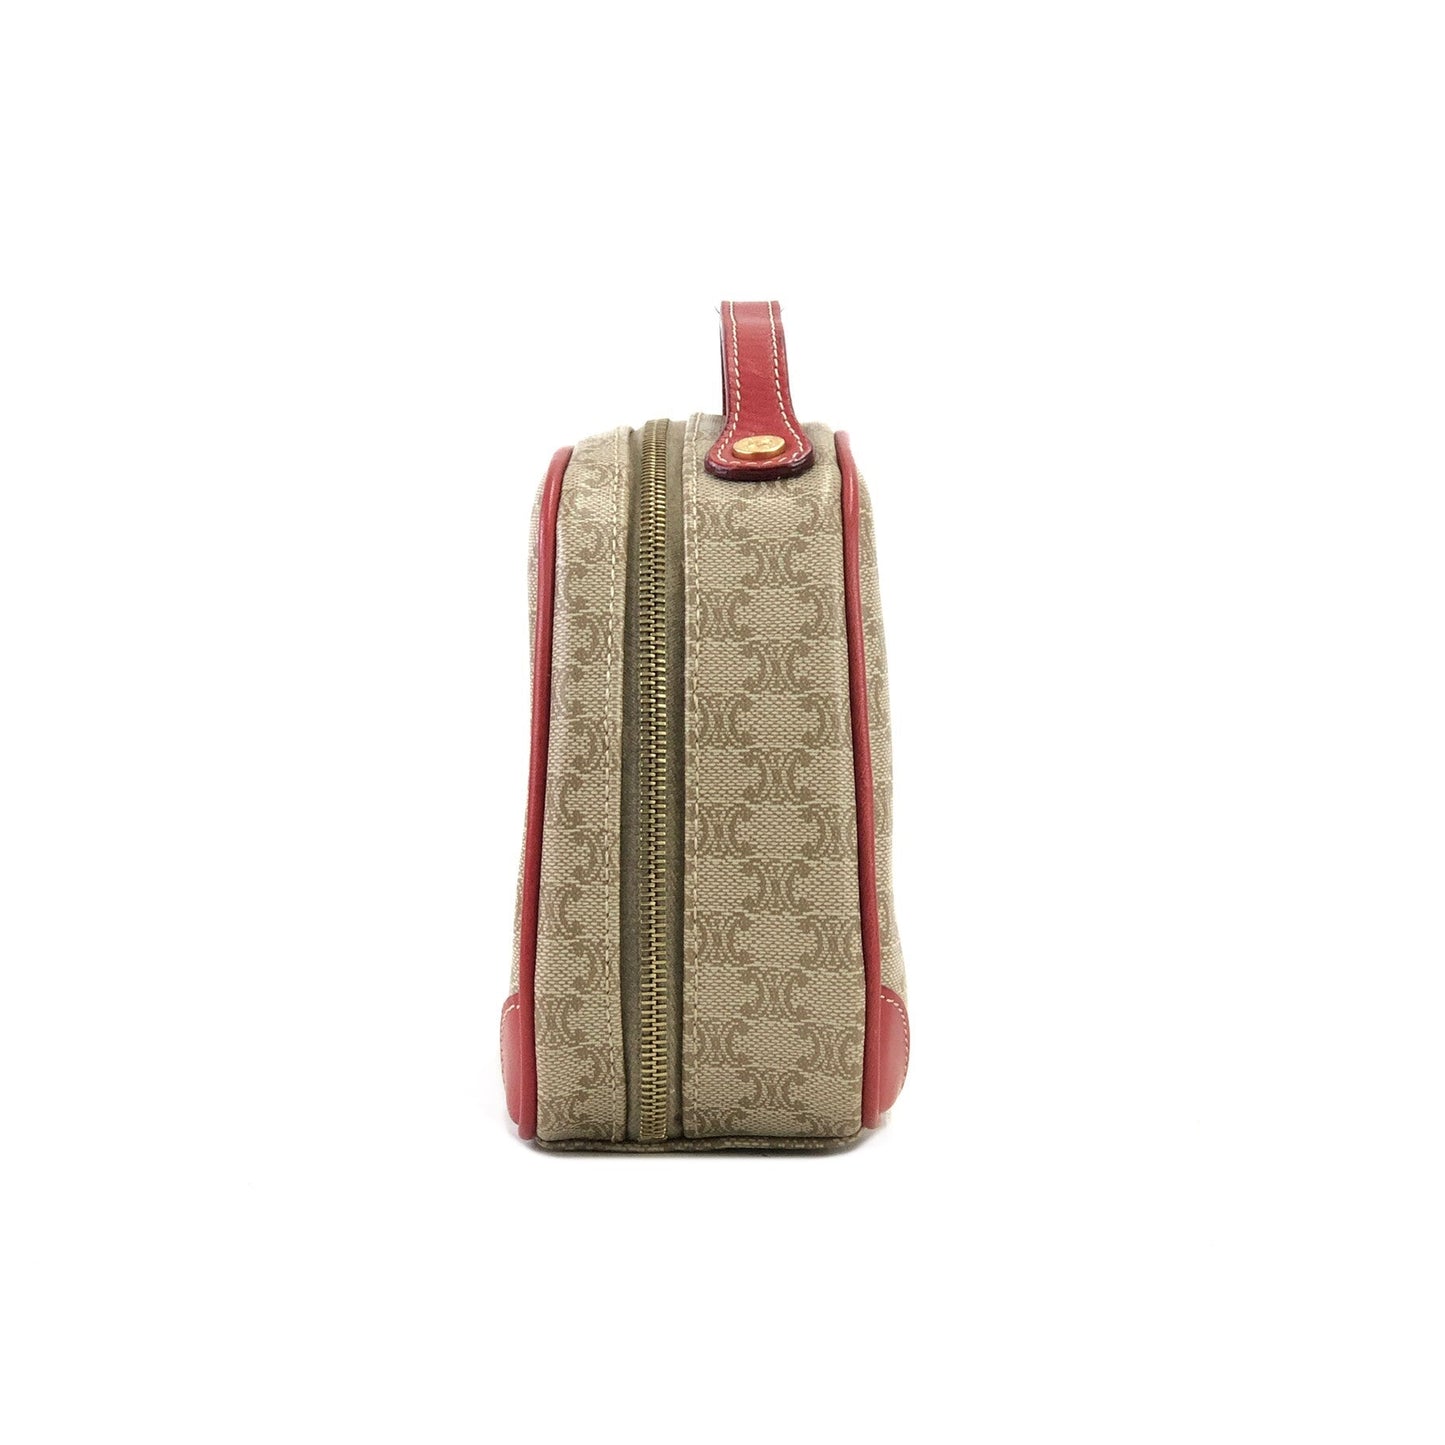 CELINE Macadam PVC leather mini bag vanity handbag red beige vintage old celine wswjnd